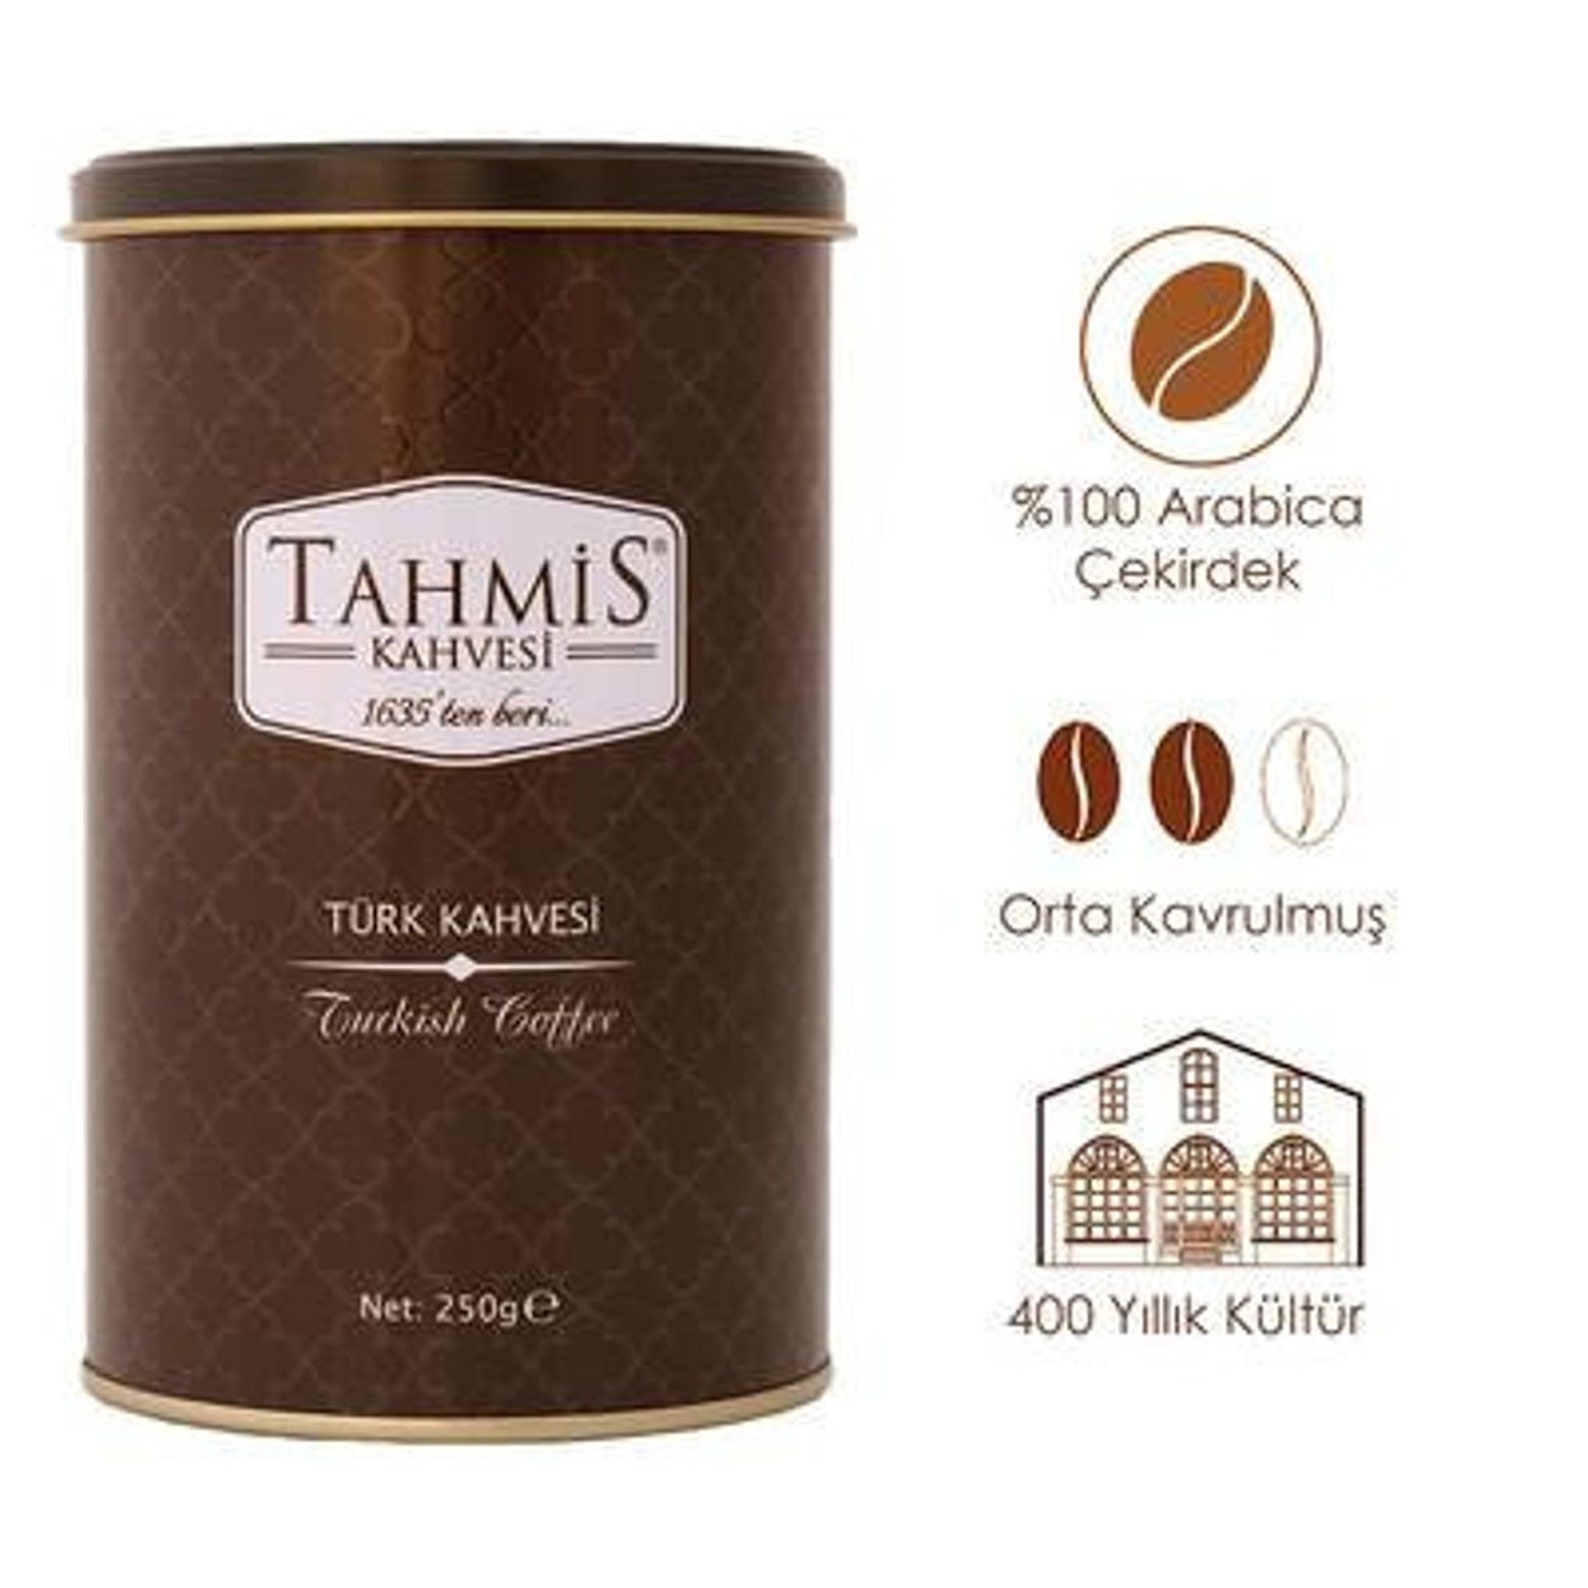 Best Quality Turkish Coffee Turkish Ground Coffee Tahmis